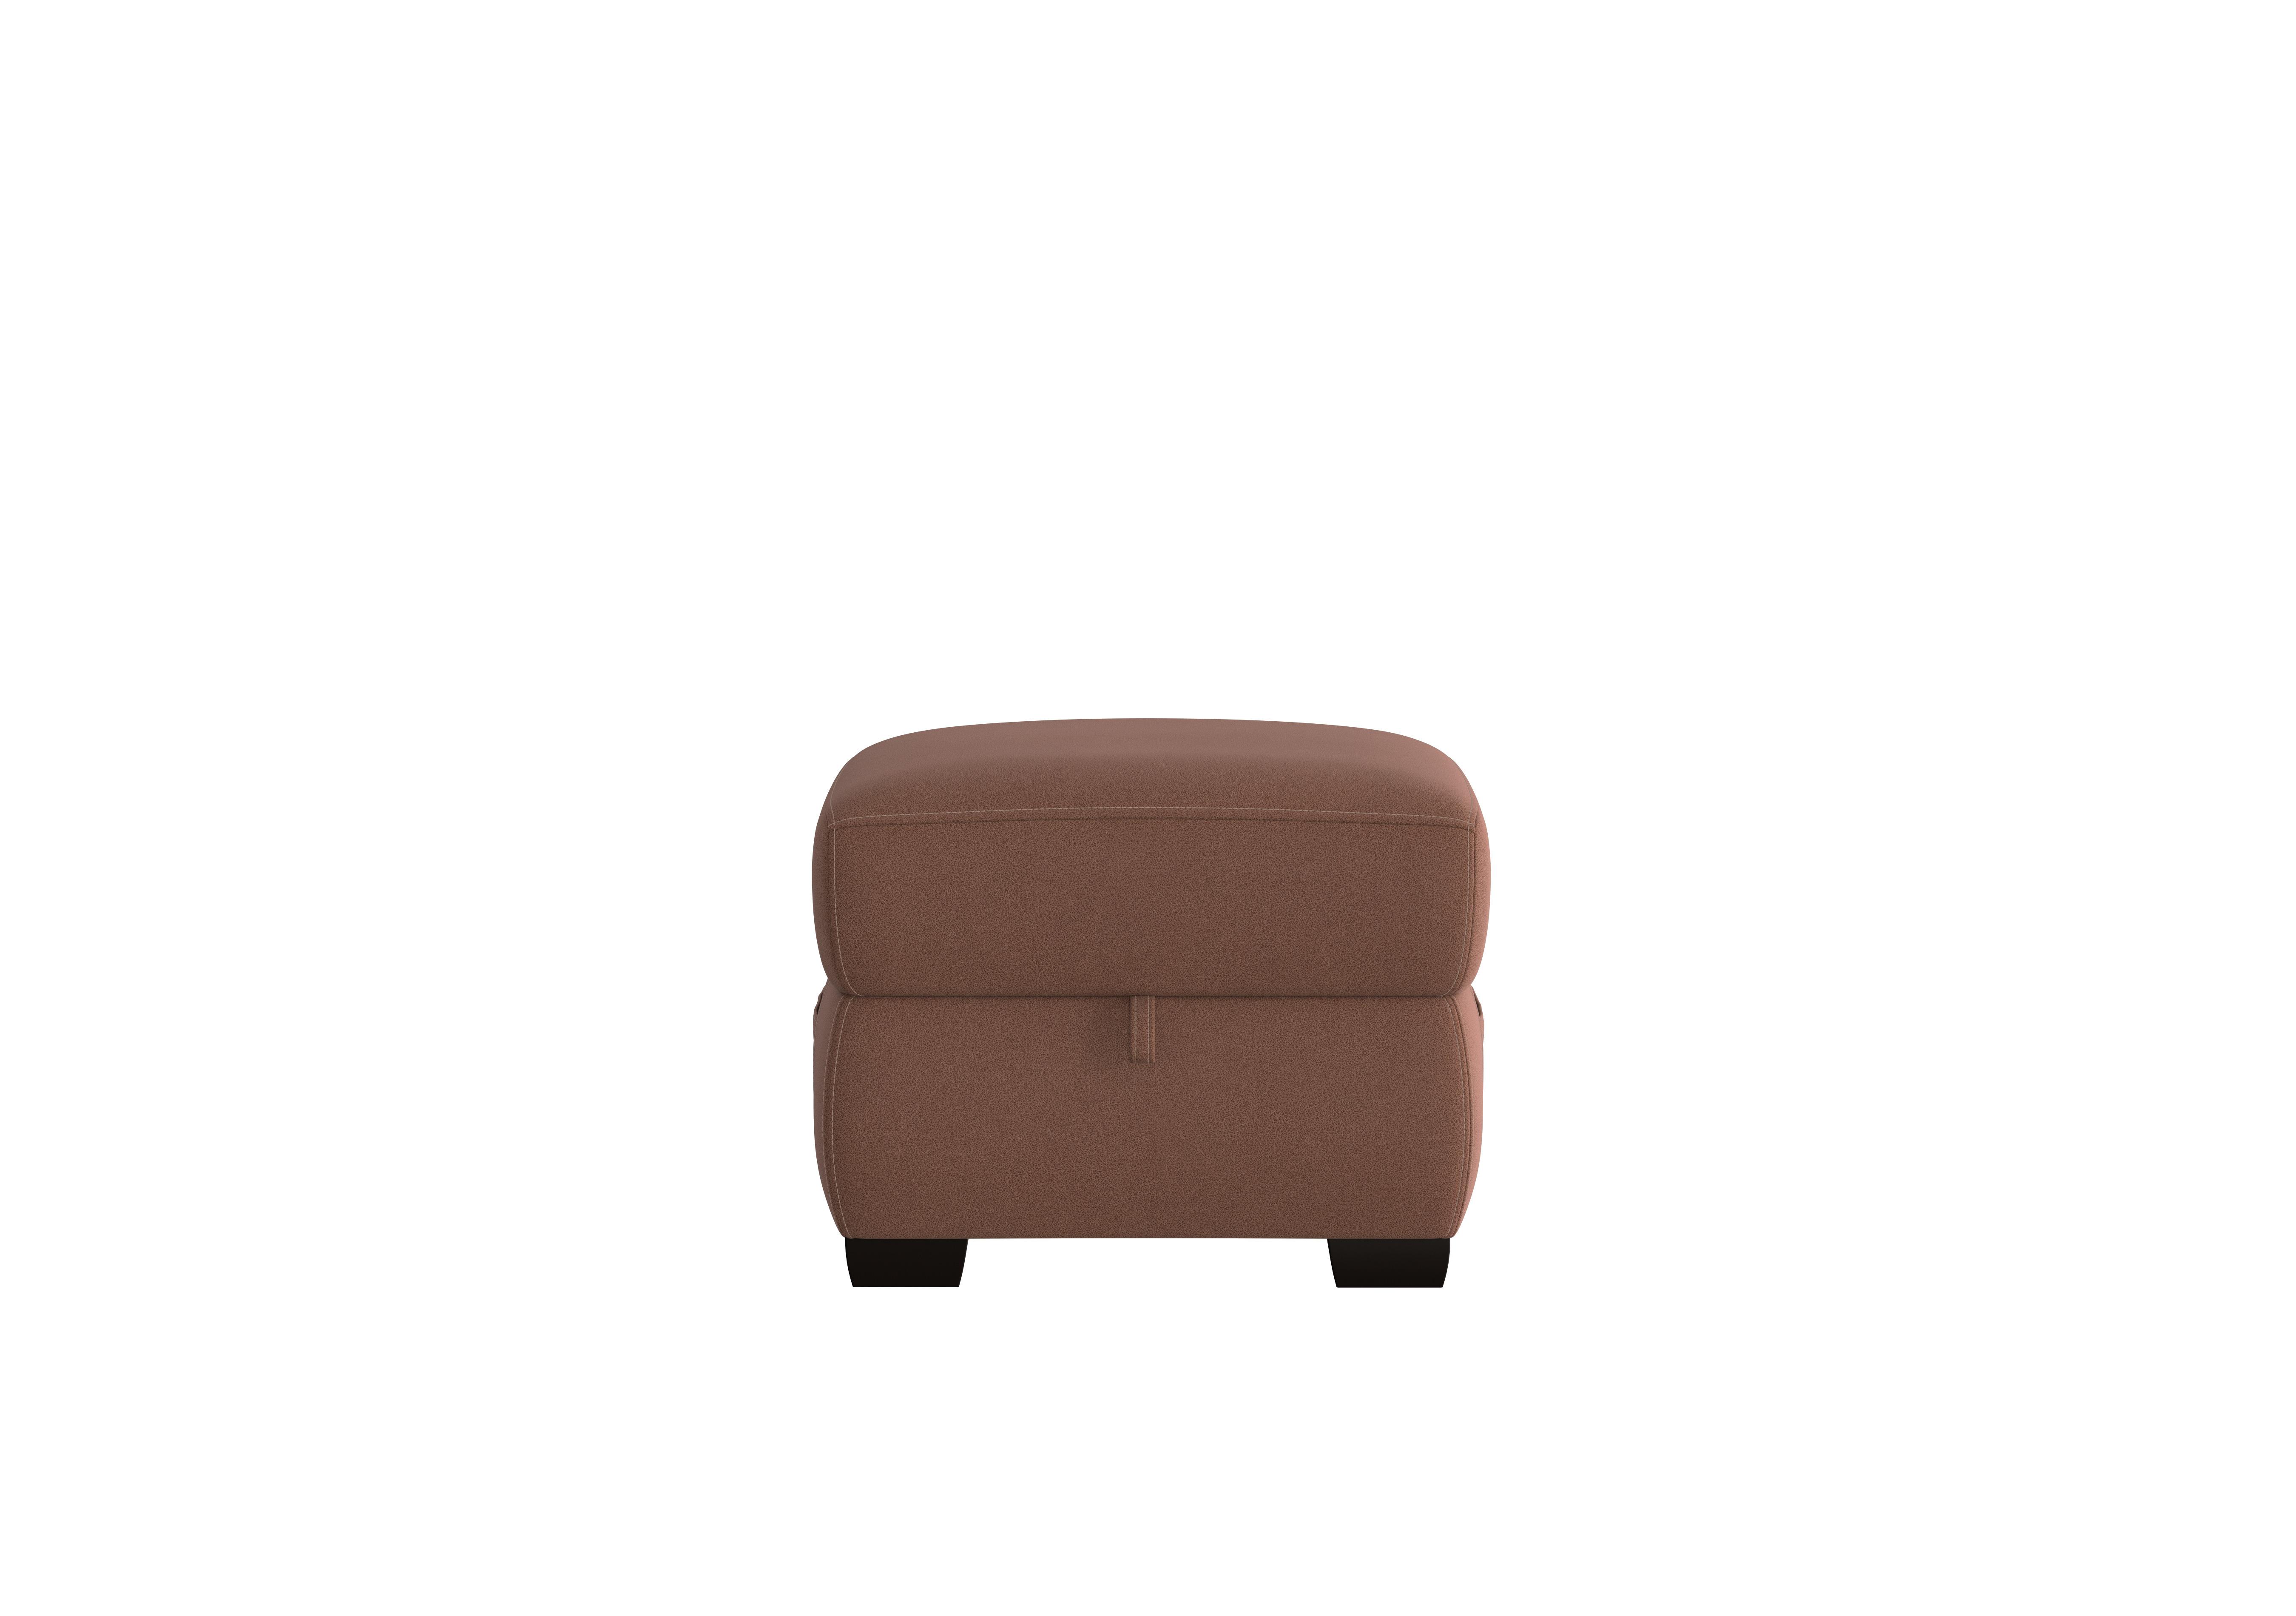 Starlight Express Fabric Storage Footstool in Bfa-Blj-R05 Hazelnut on Furniture Village